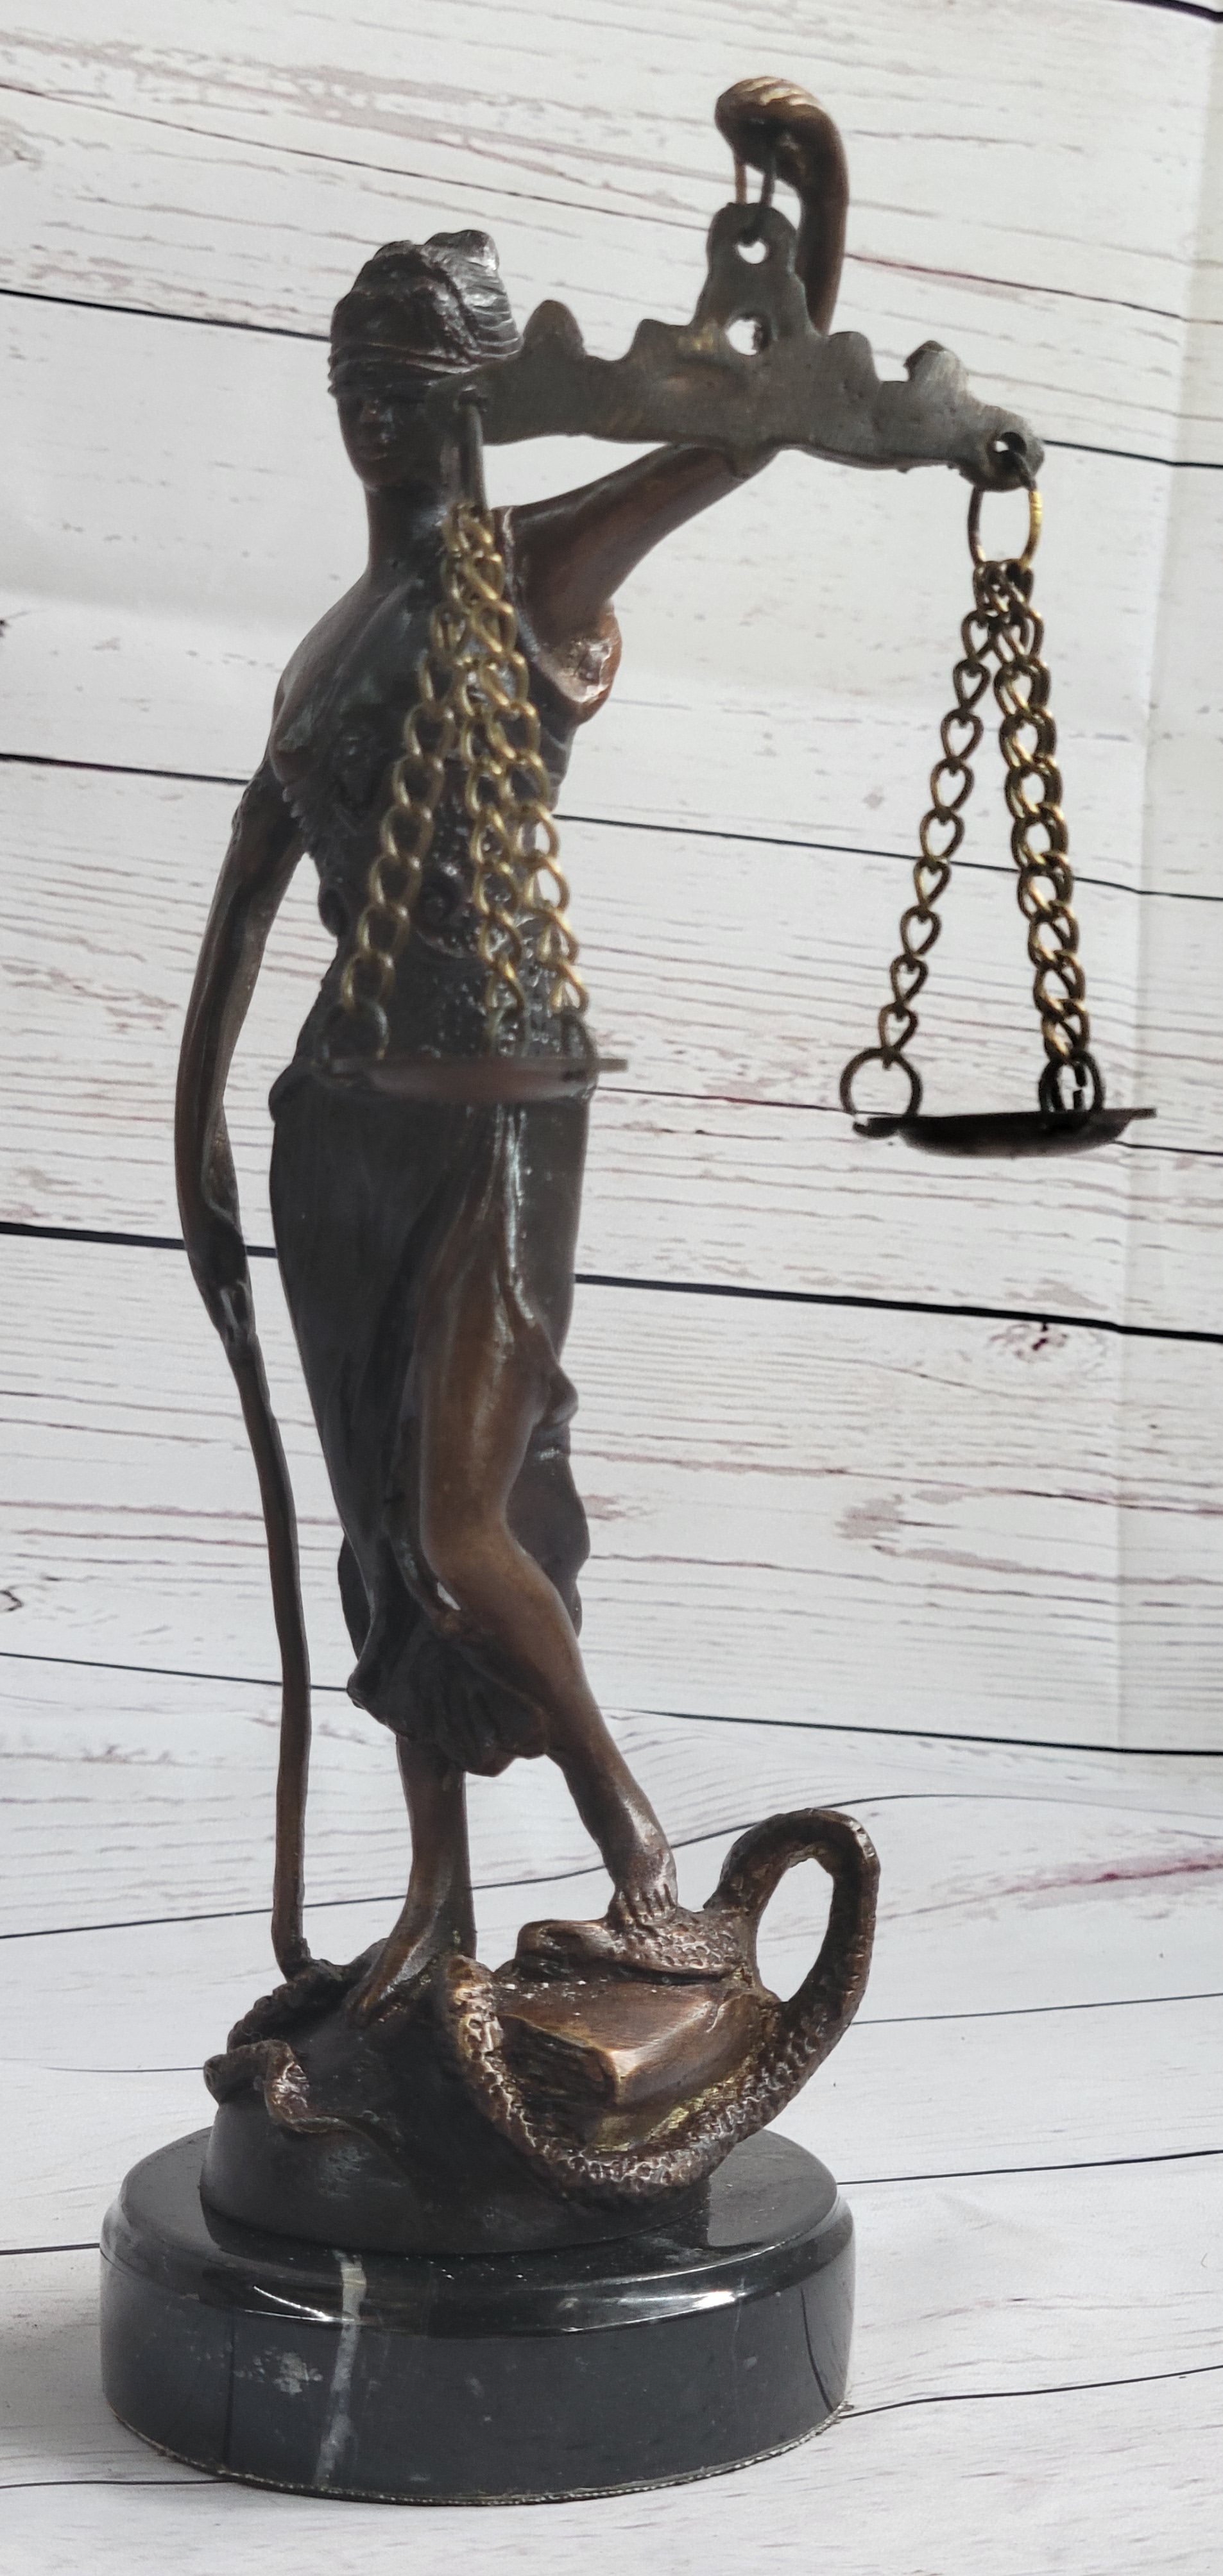 10" Tall BRONZE BLIND JUSTICE LAW MARBLE STATUE LADY SCALE Sculpture Nouveau Art